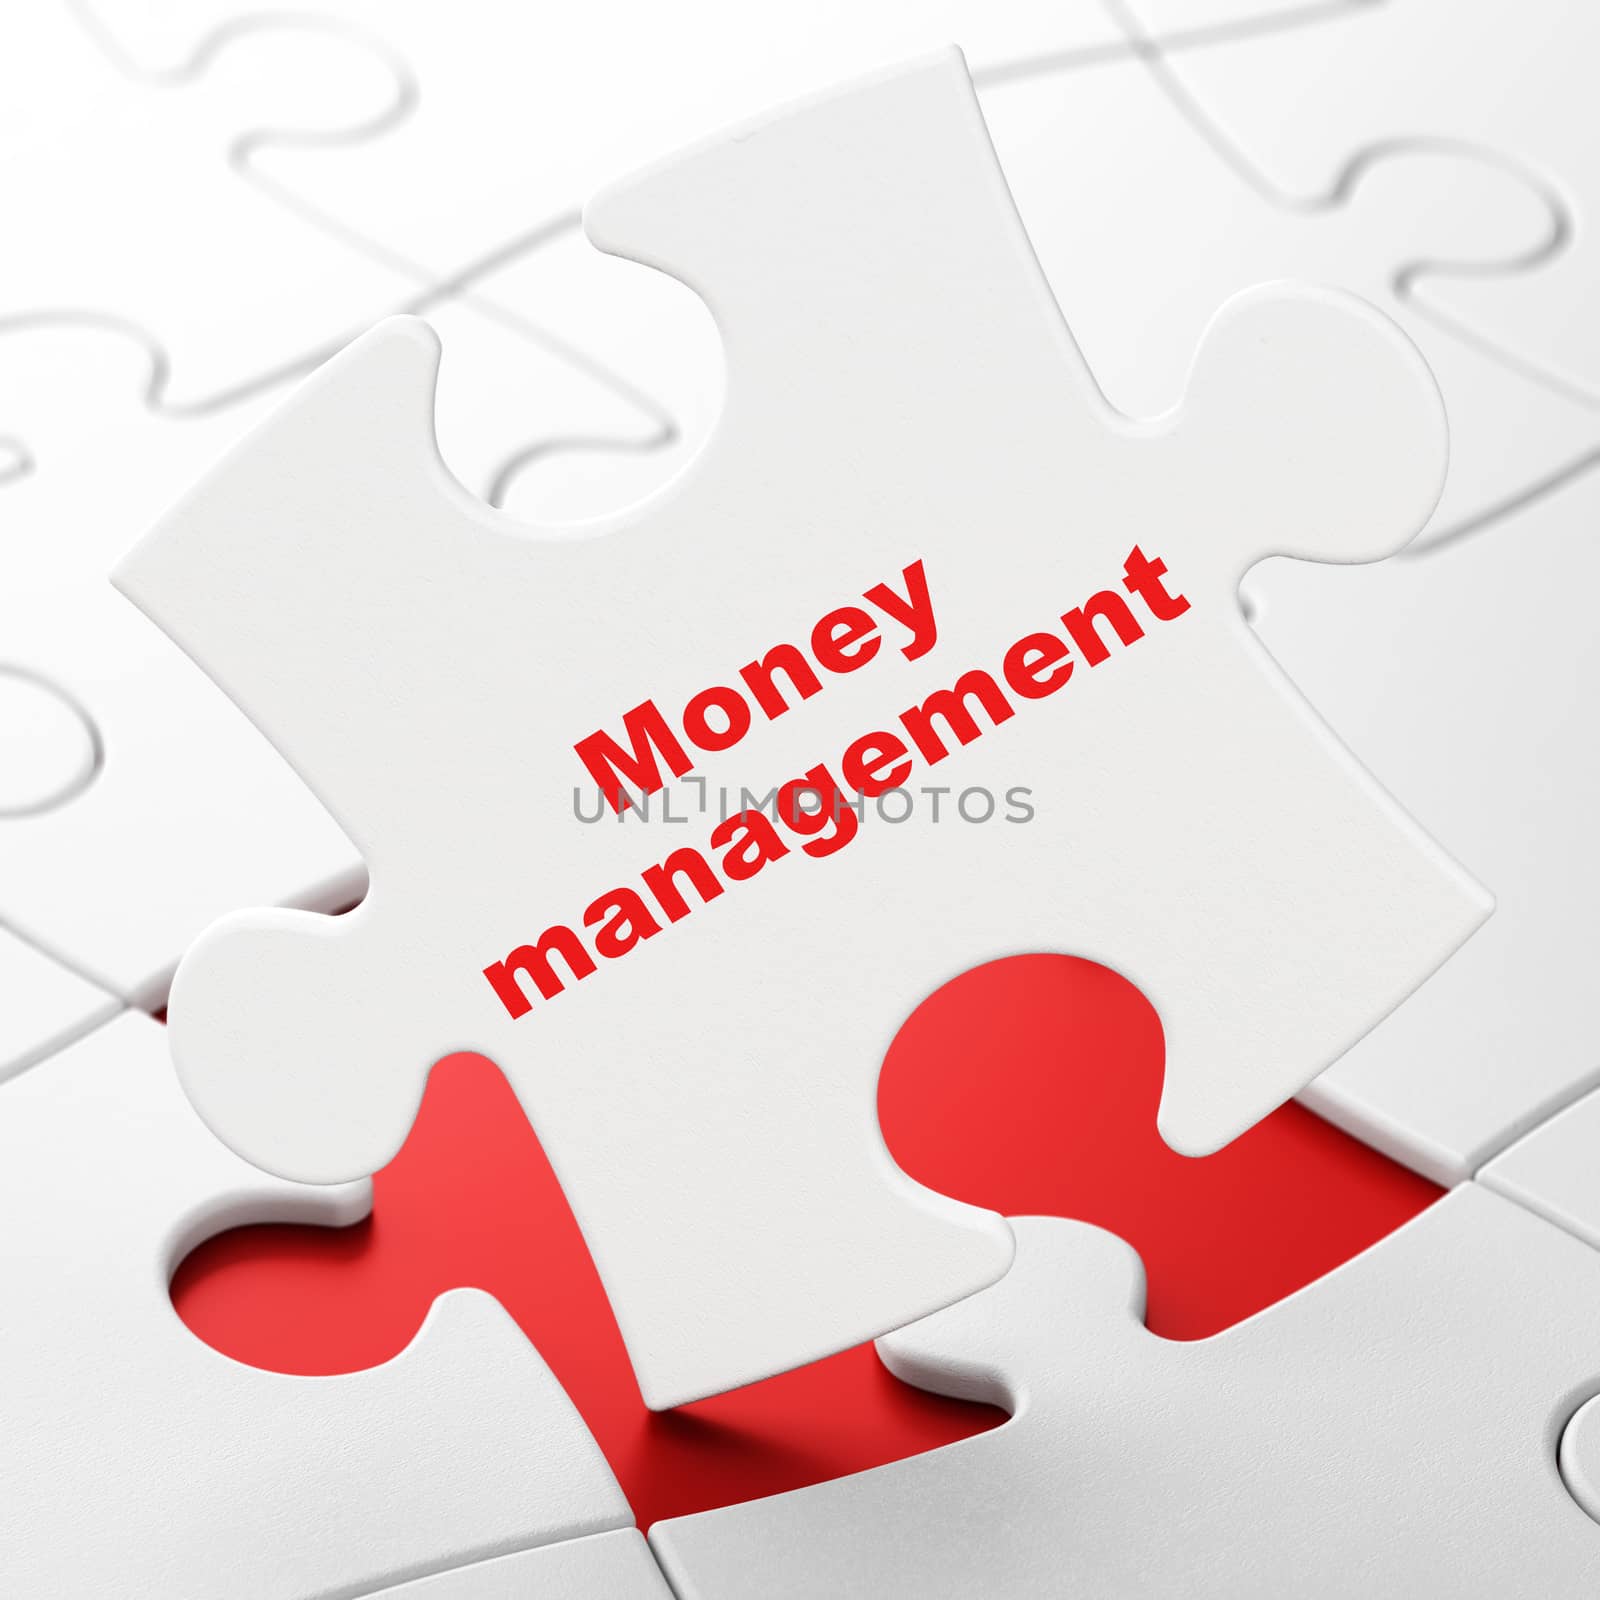 Money concept: Money Management on puzzle background by maxkabakov